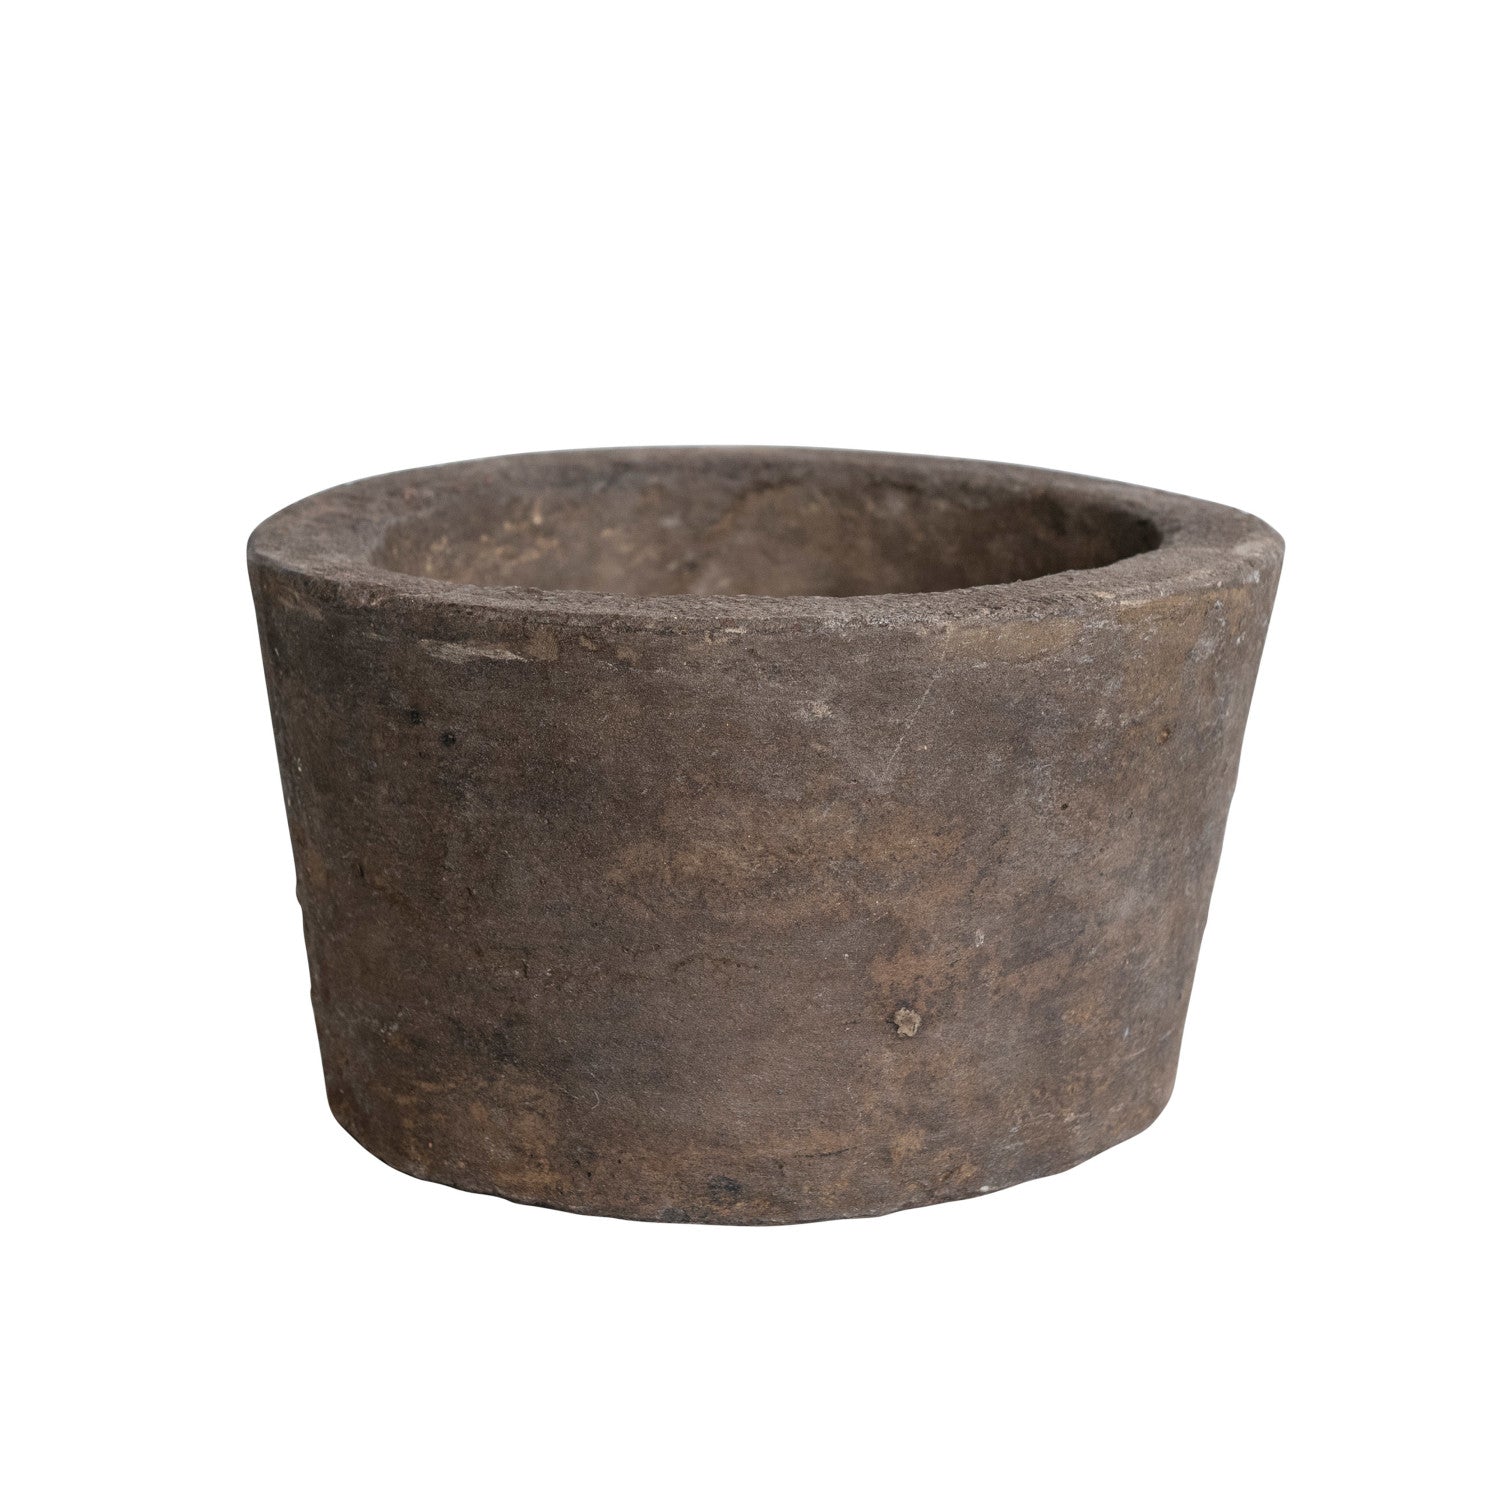 Decorative Concrete Animal Feeder Bowl